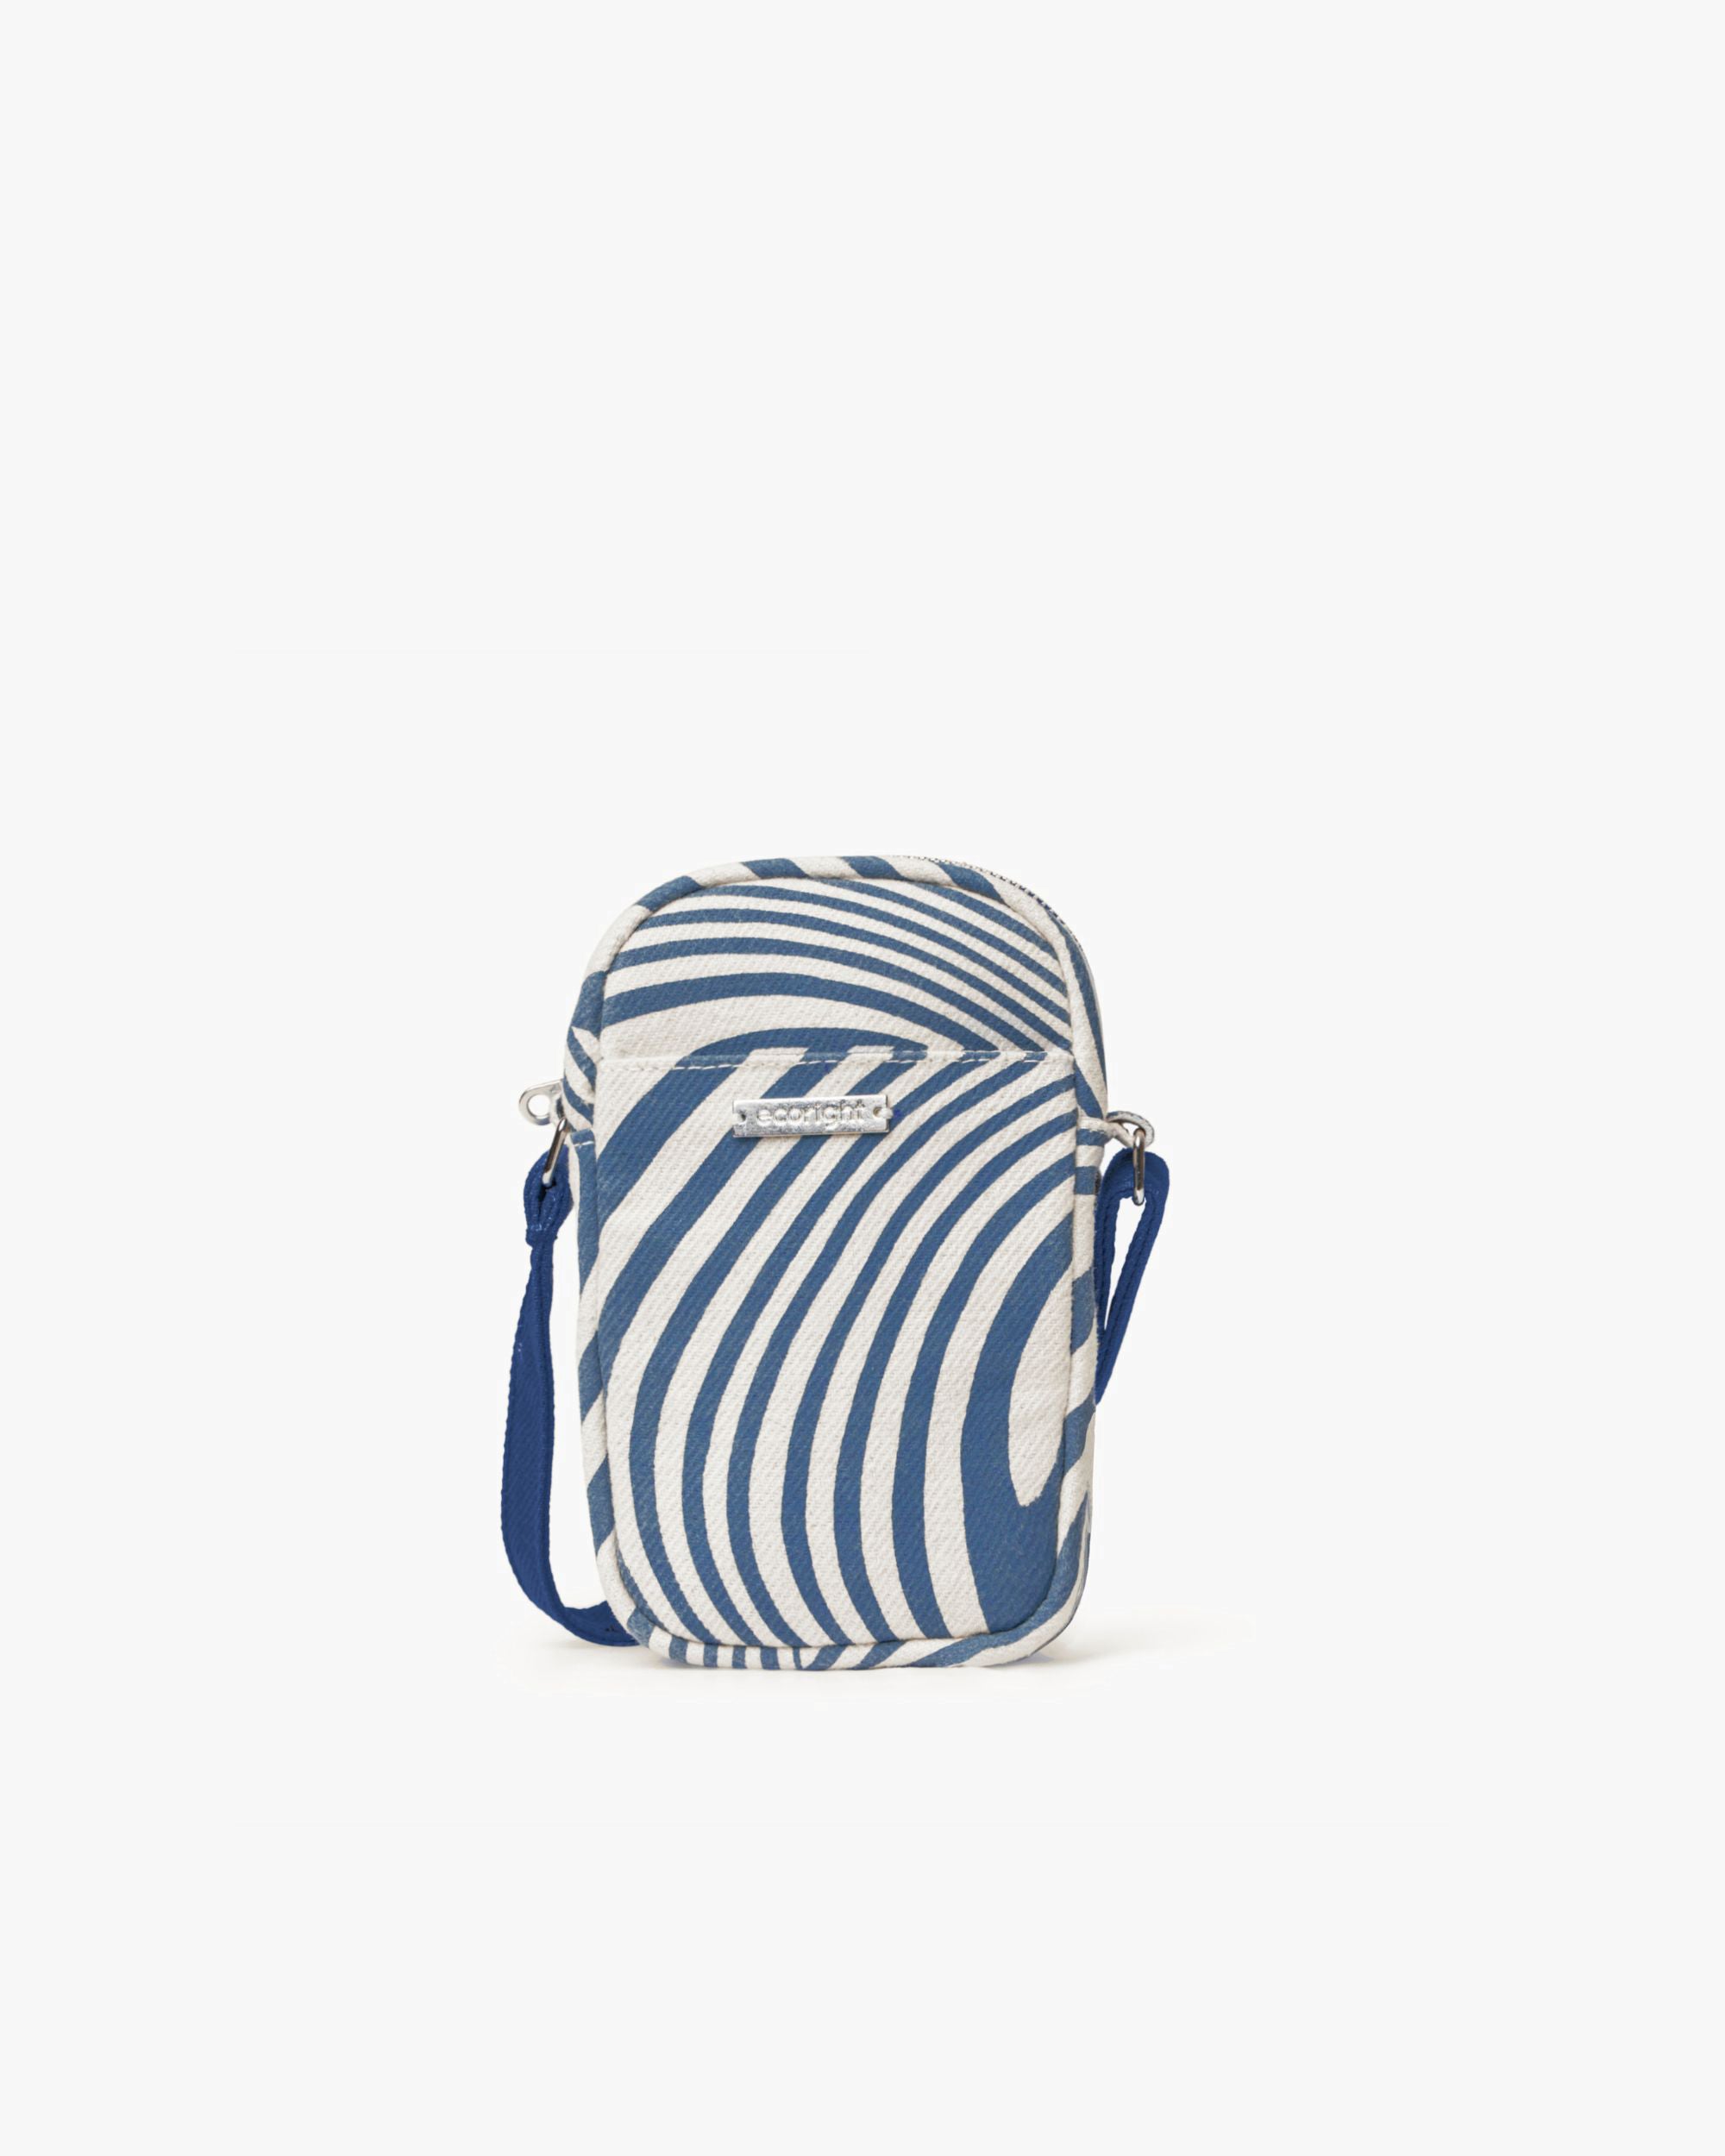 The Phone Bag - Striped Marlin